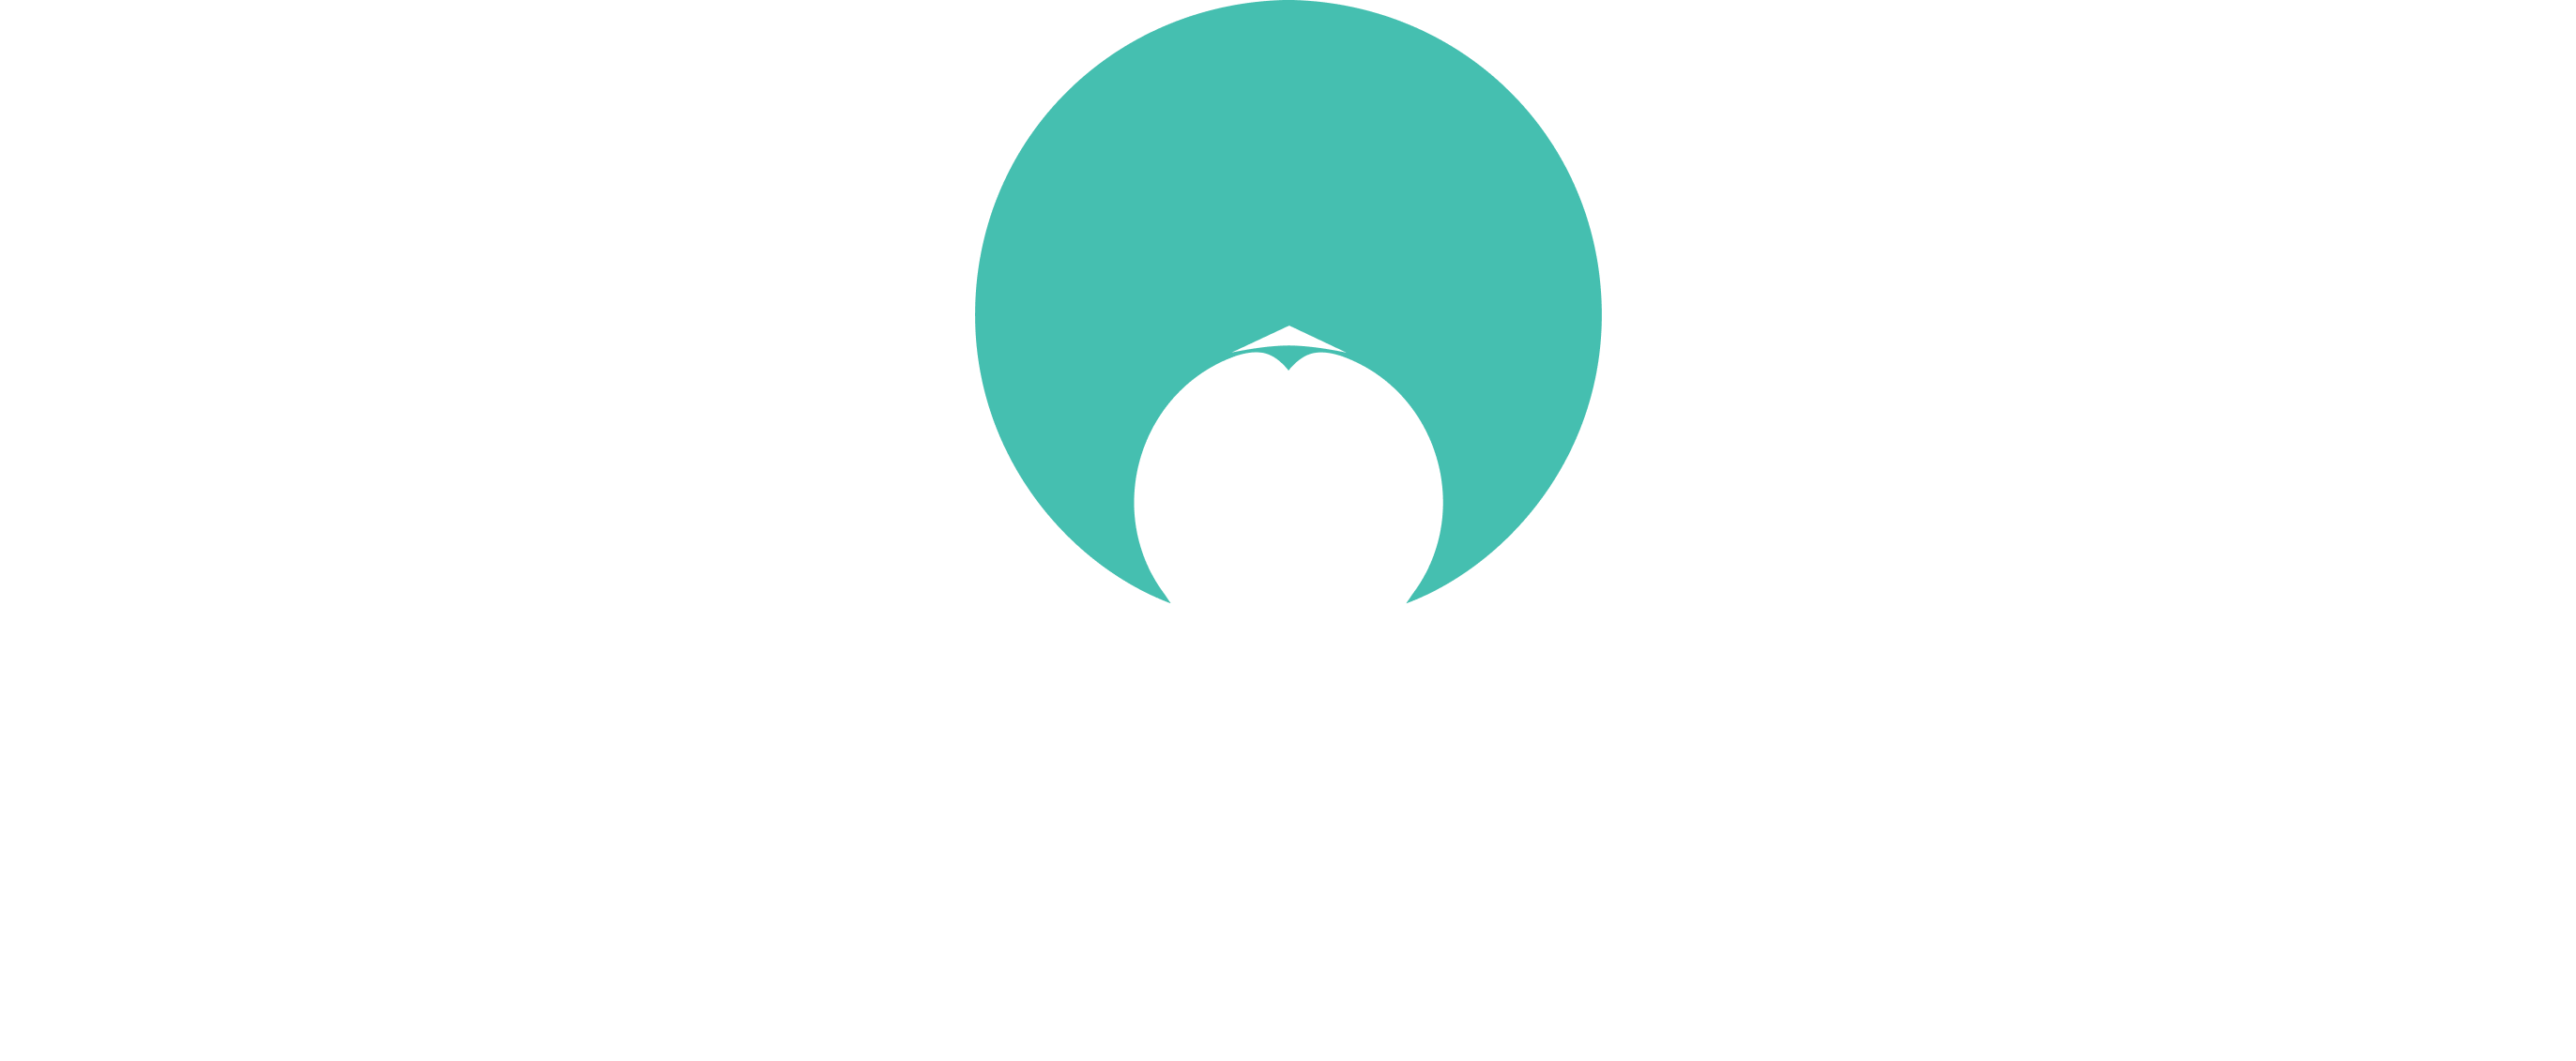 Moongate logo